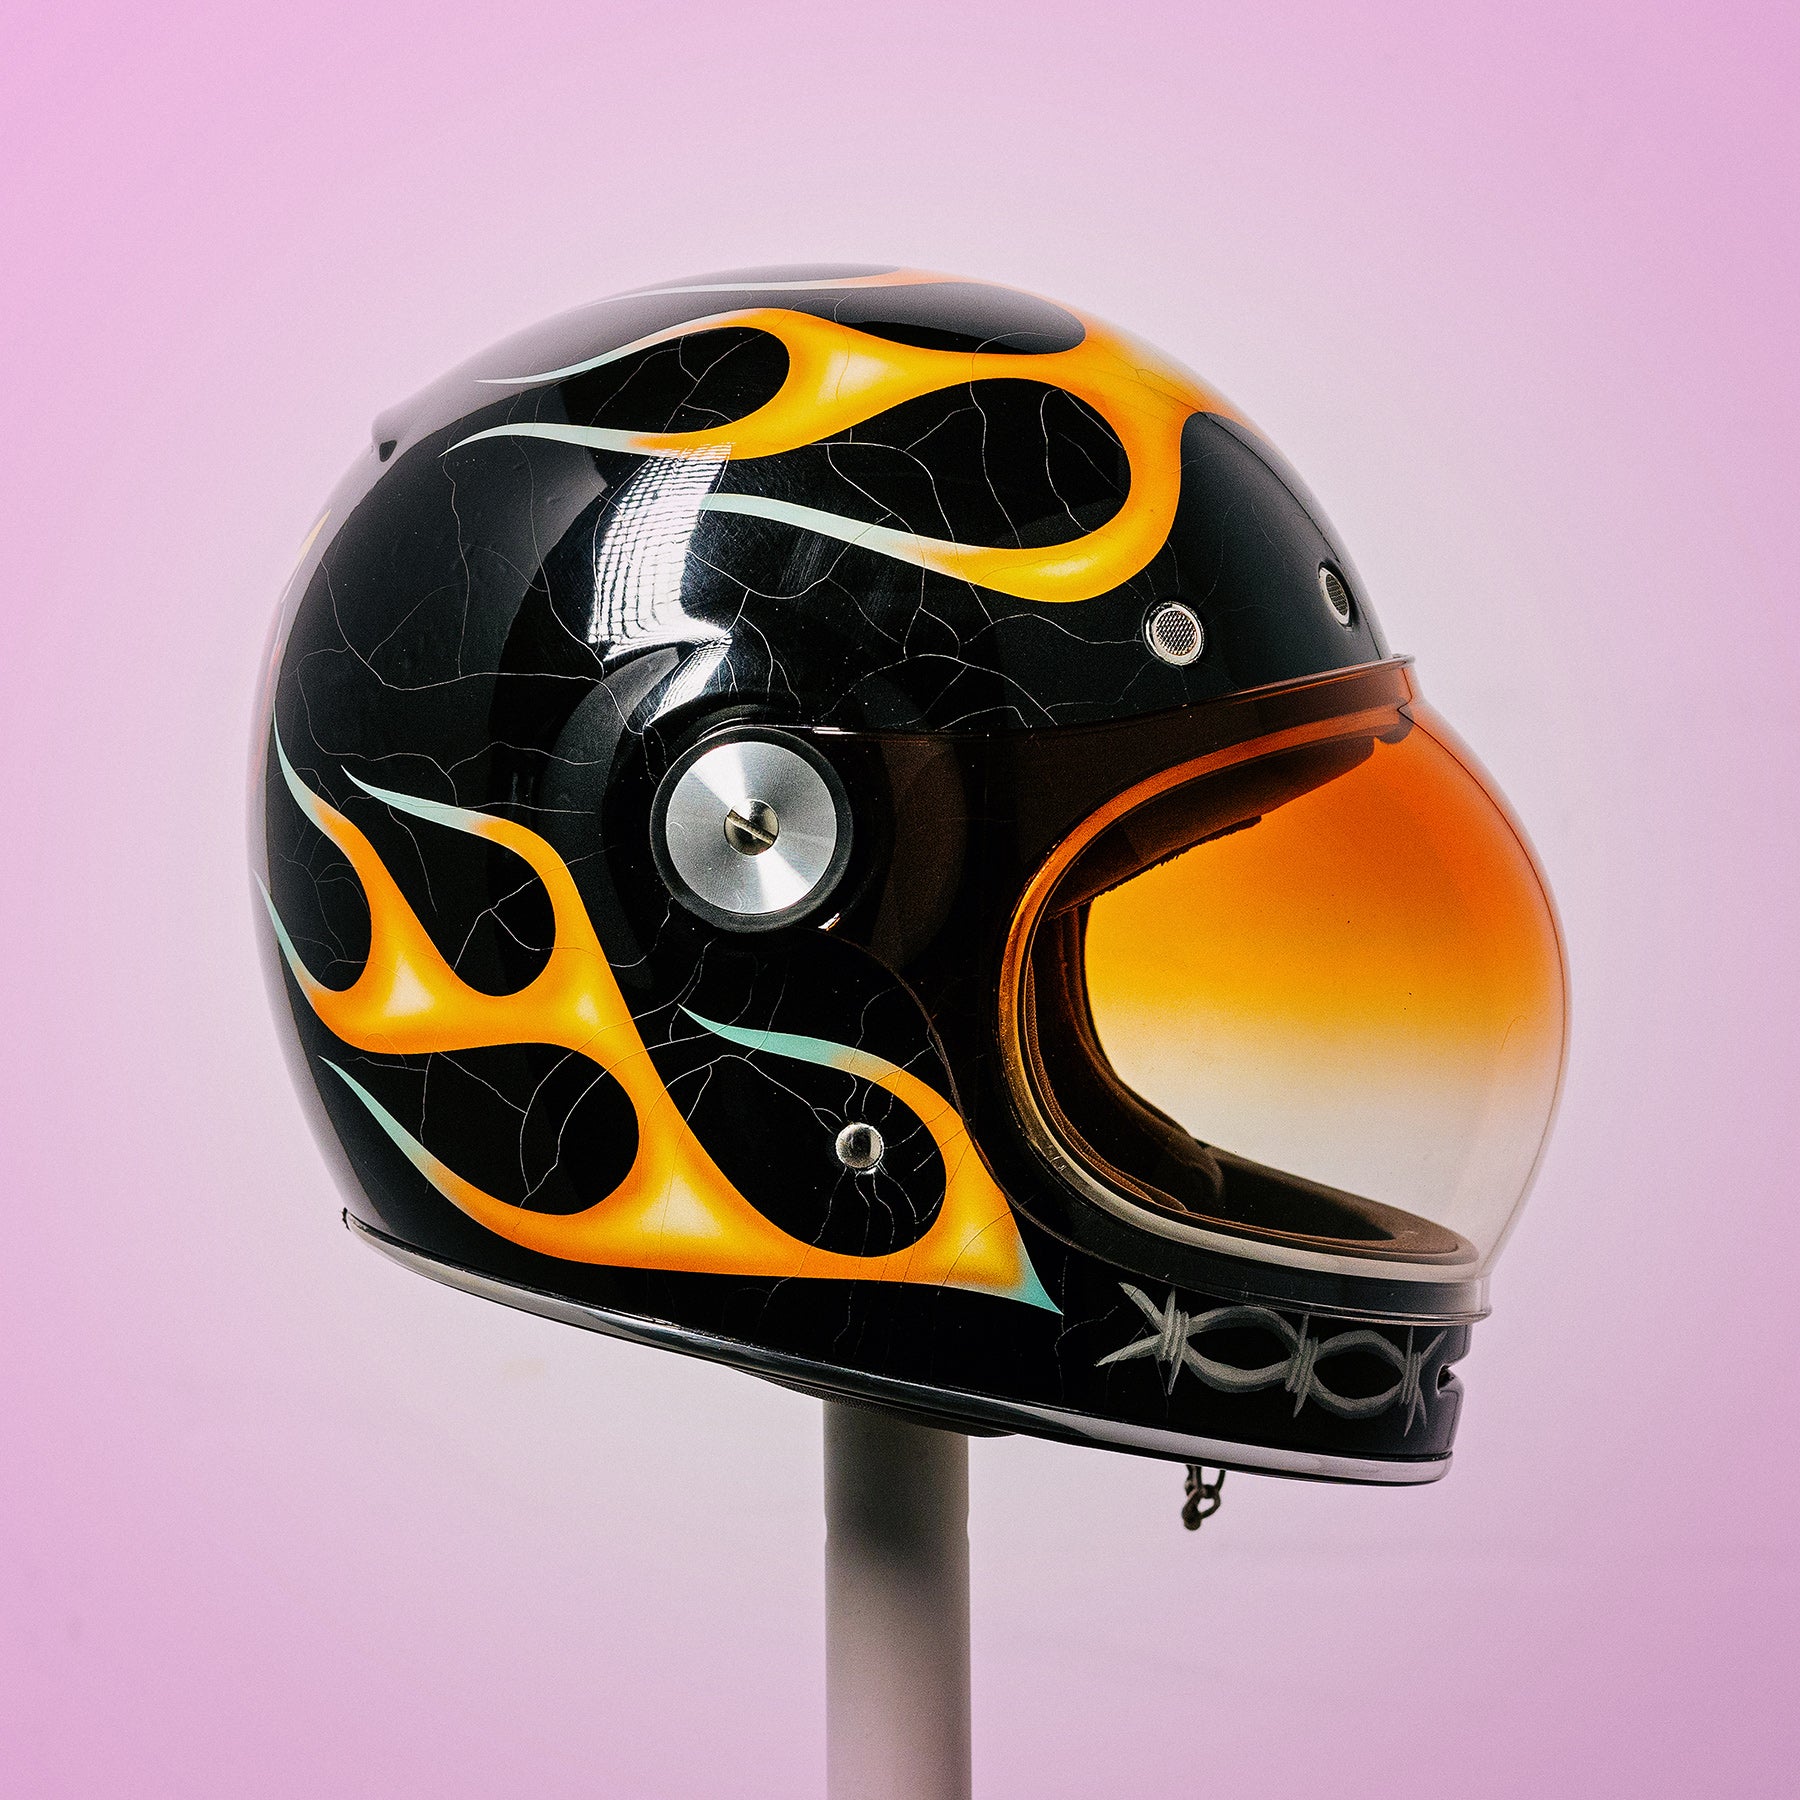 Trippy Ten Helmet Art Show Pittsburgh Mikey Favacchia Paint